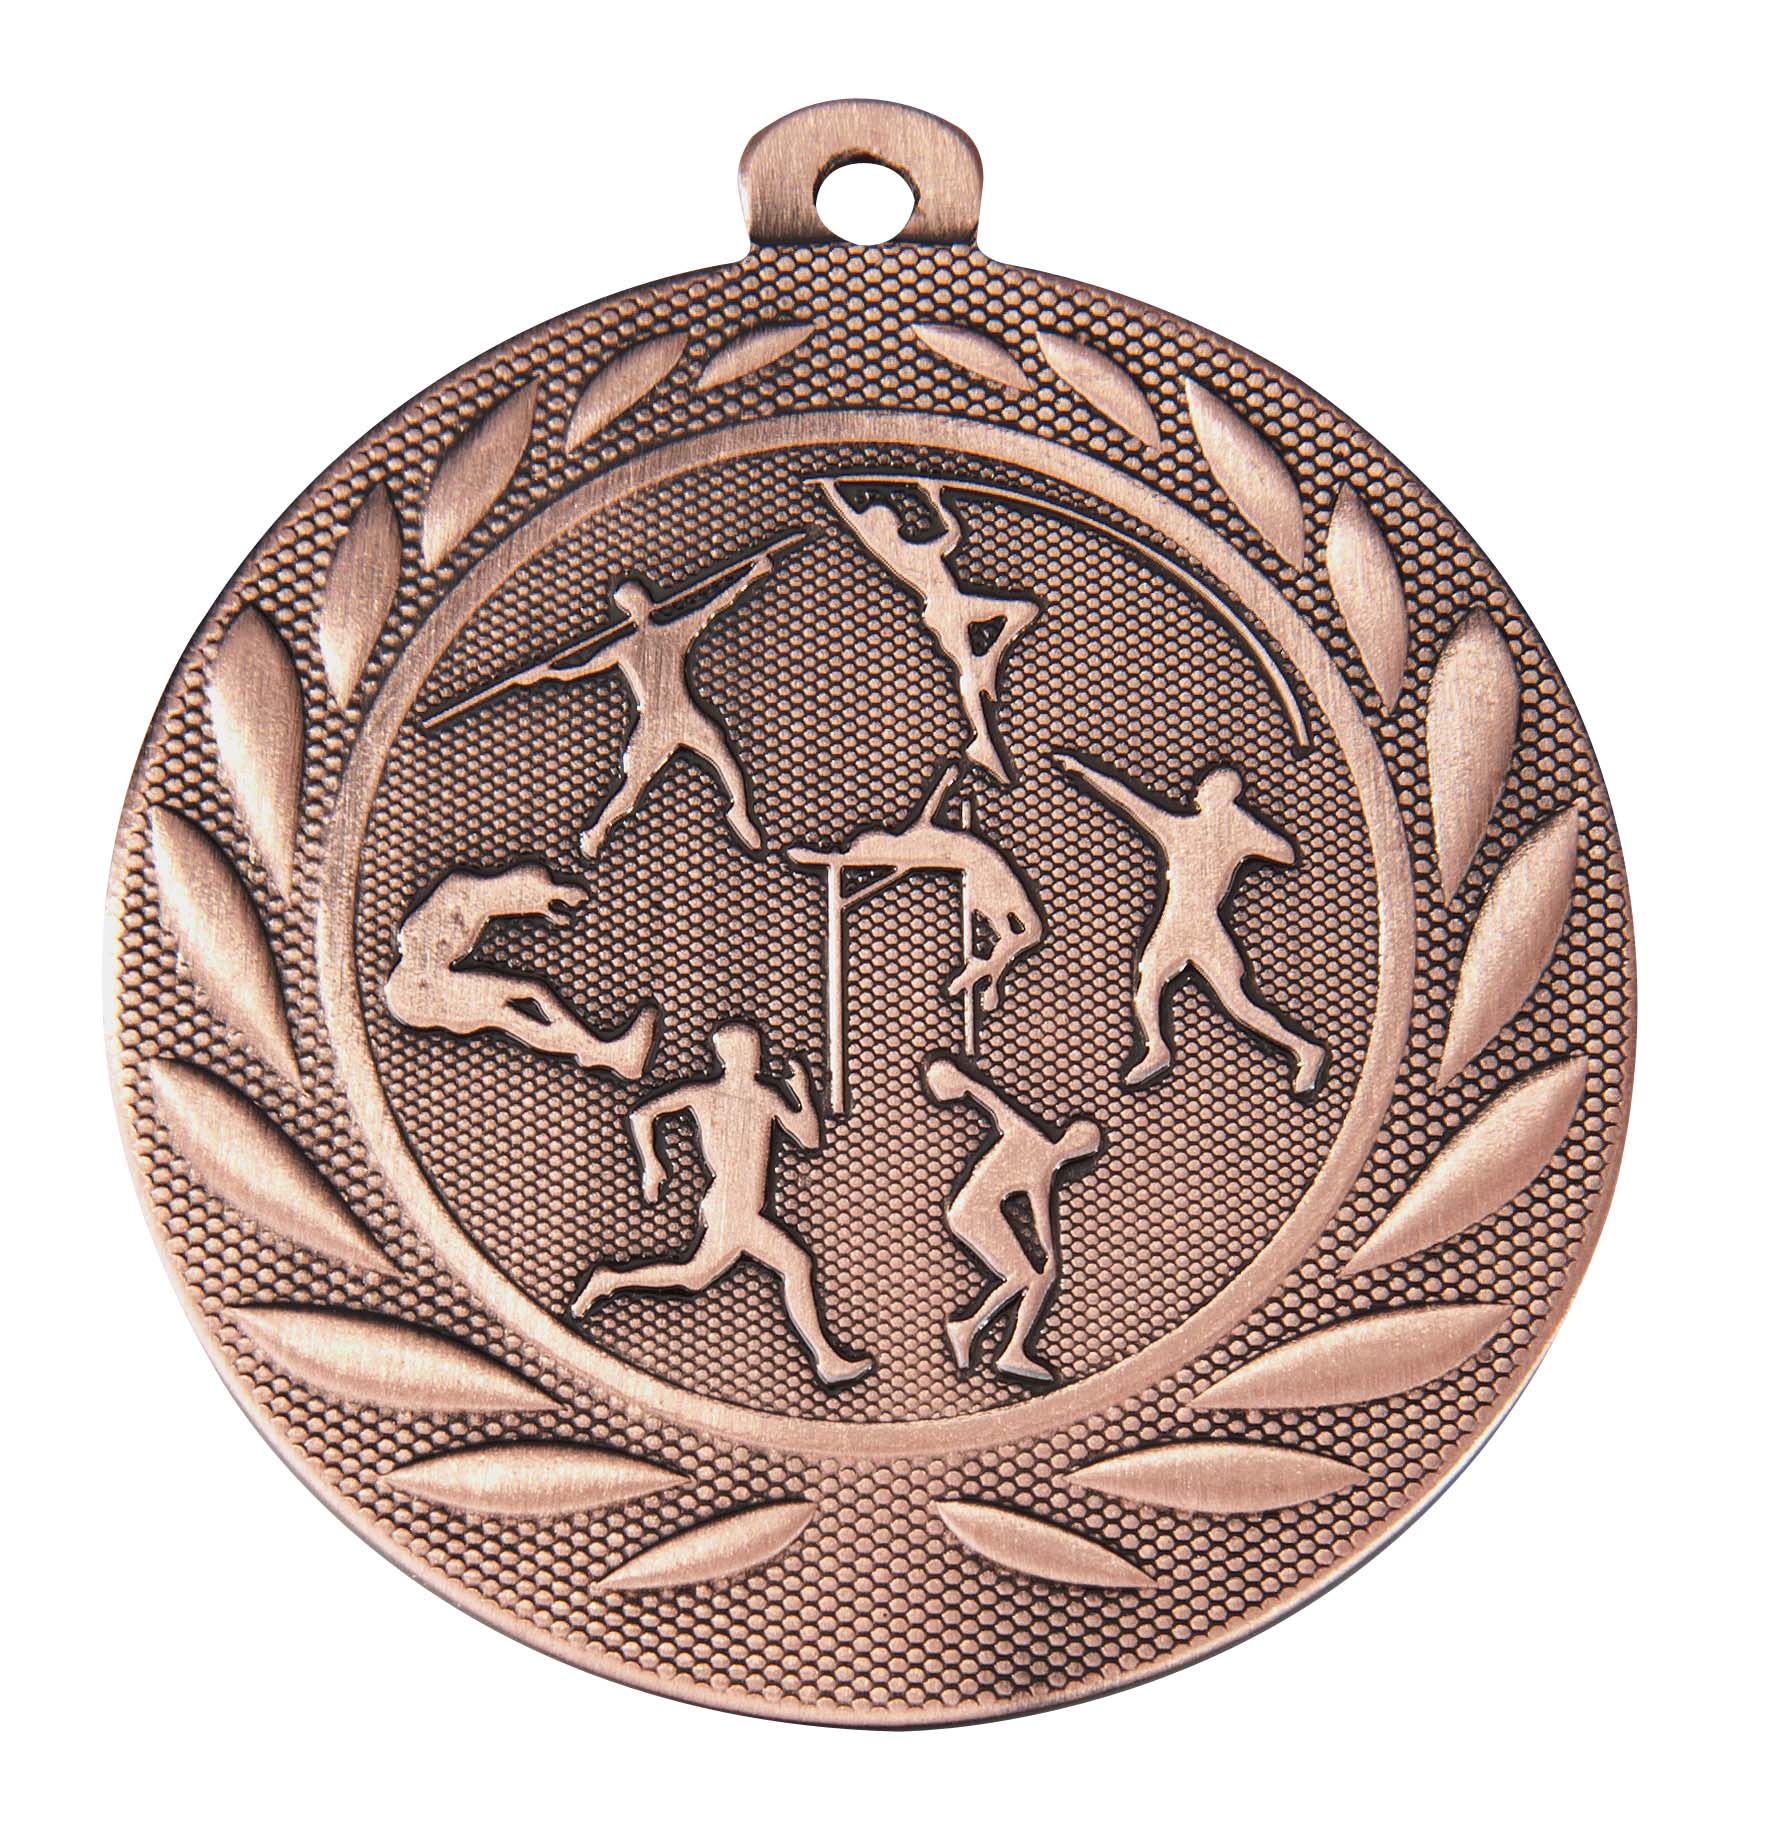 Leichtathletik-Medaille DI5000K inkl. Band und Beschriftung Bronze Fertig montiert gegen Aufpreis